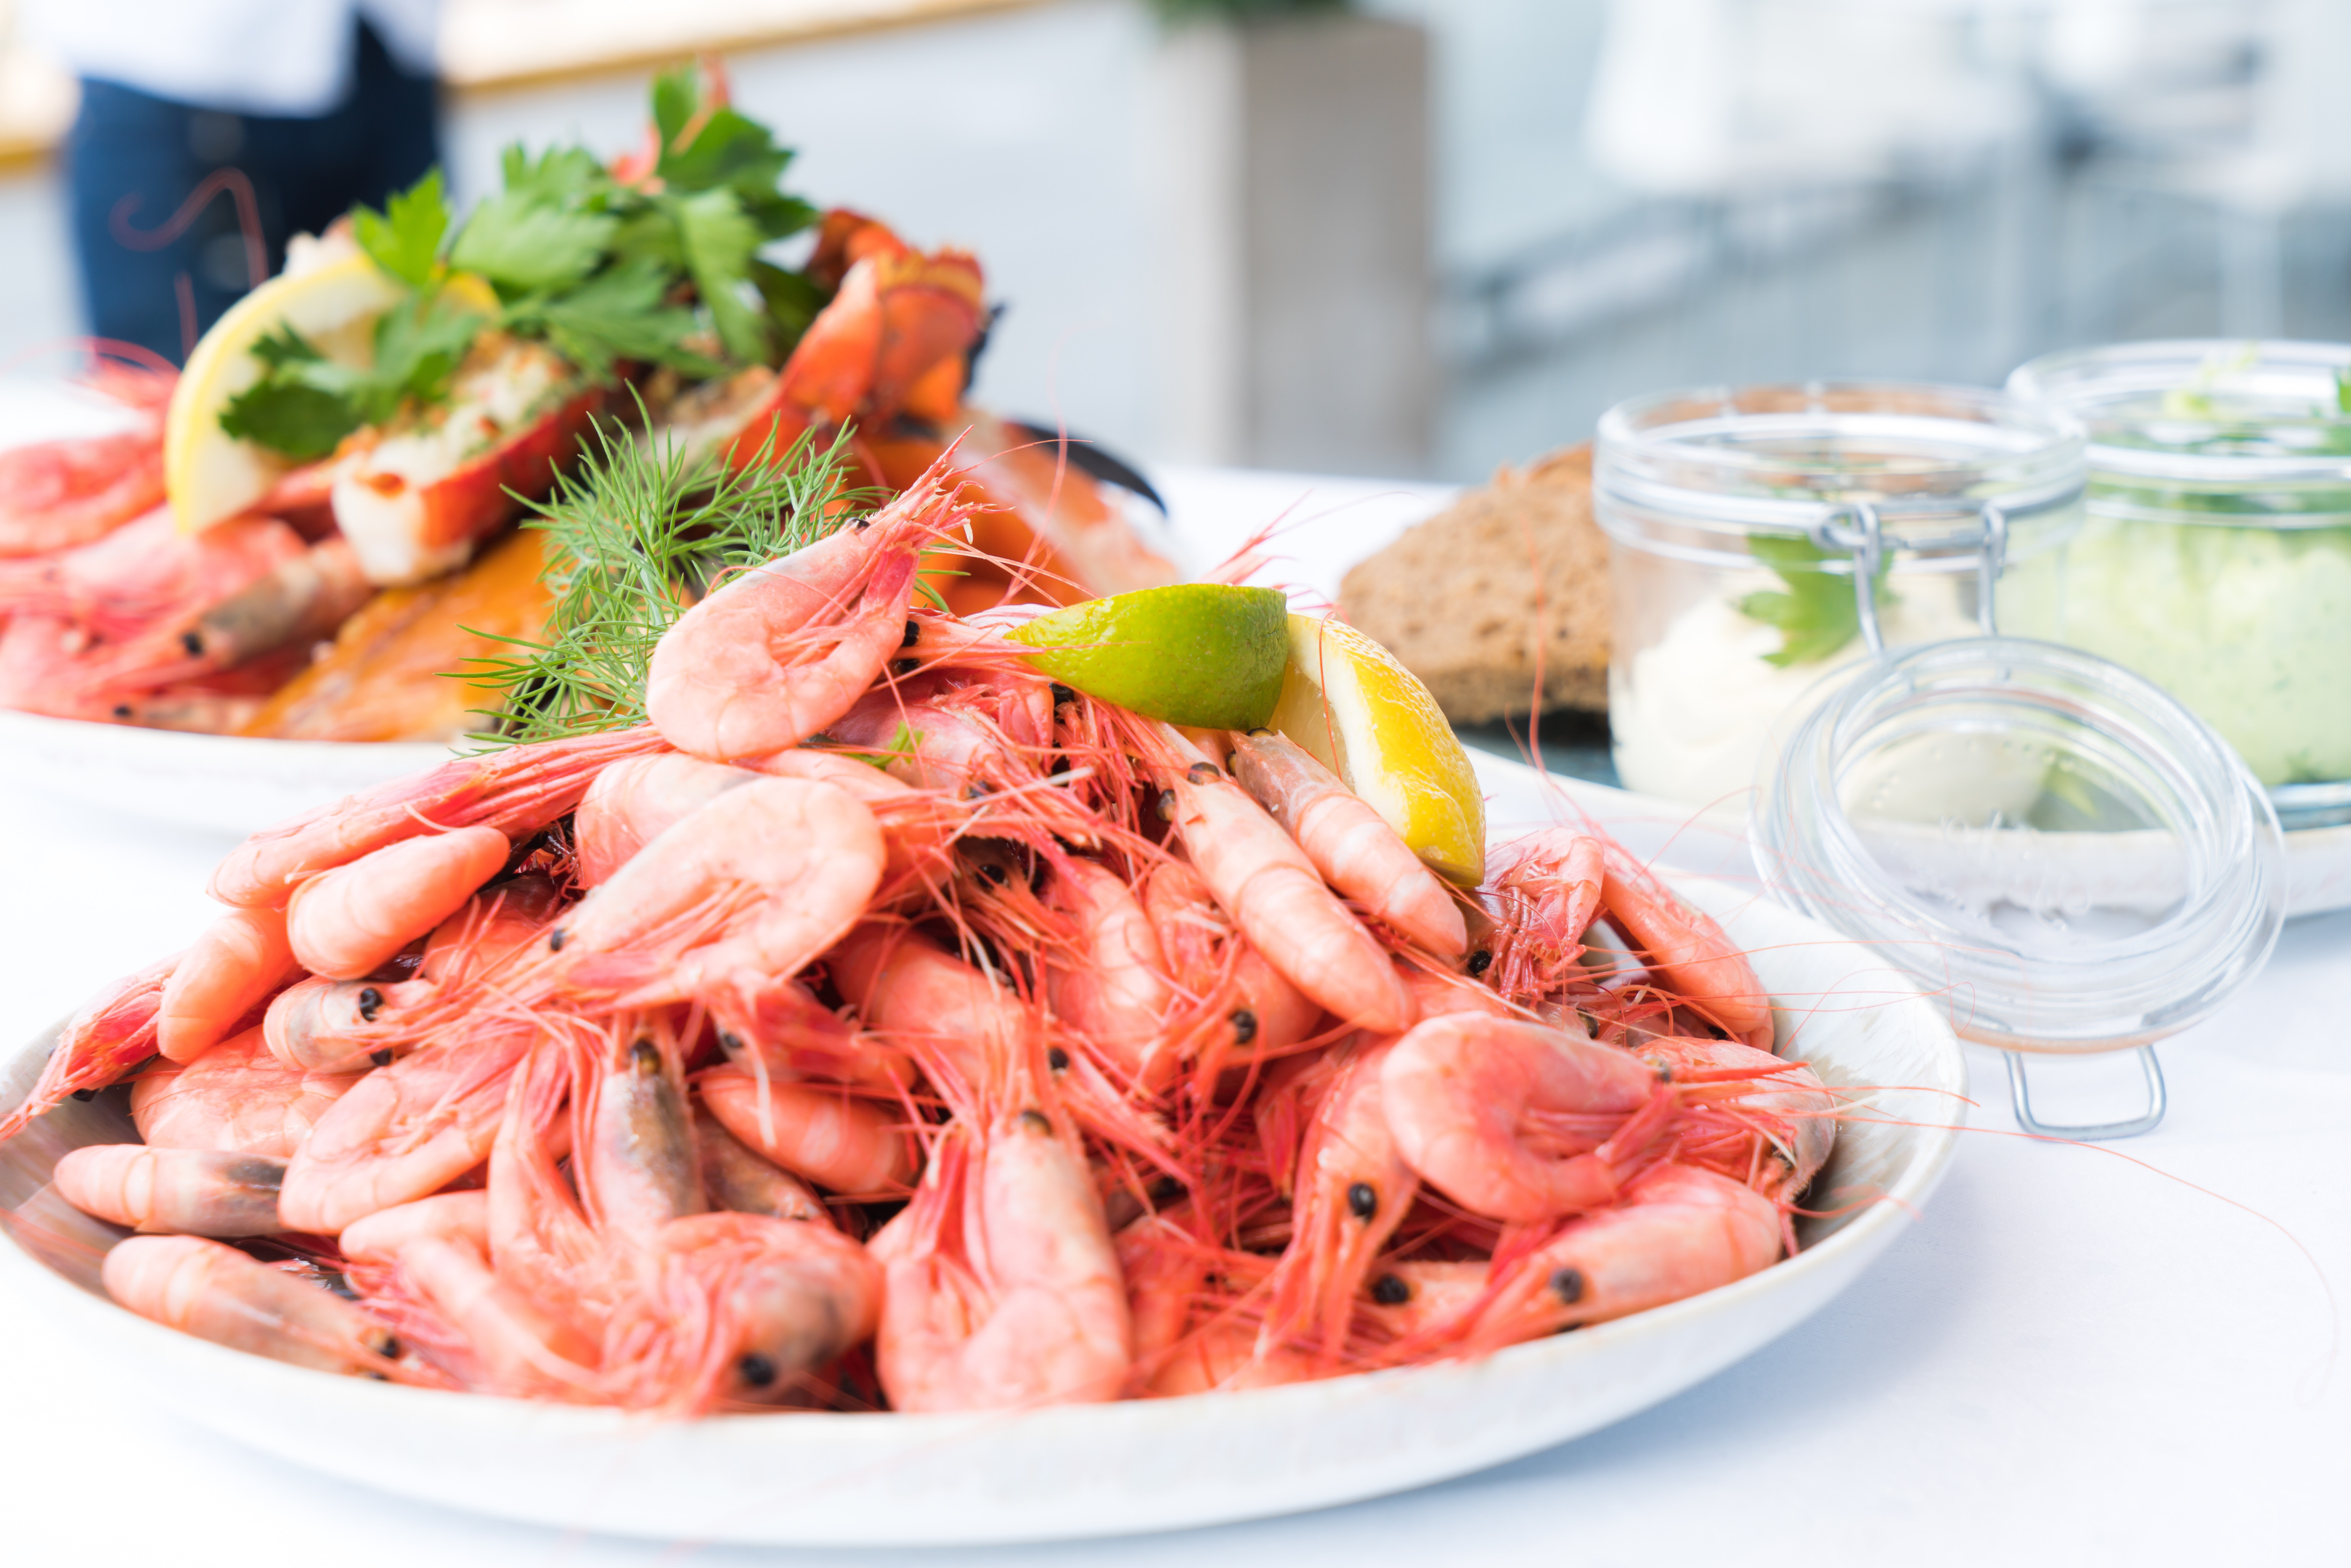 Image source: https://www.pexels.com/photo/boiled-shrimps-566344/    Caption: Shrimp on plate in restaurant